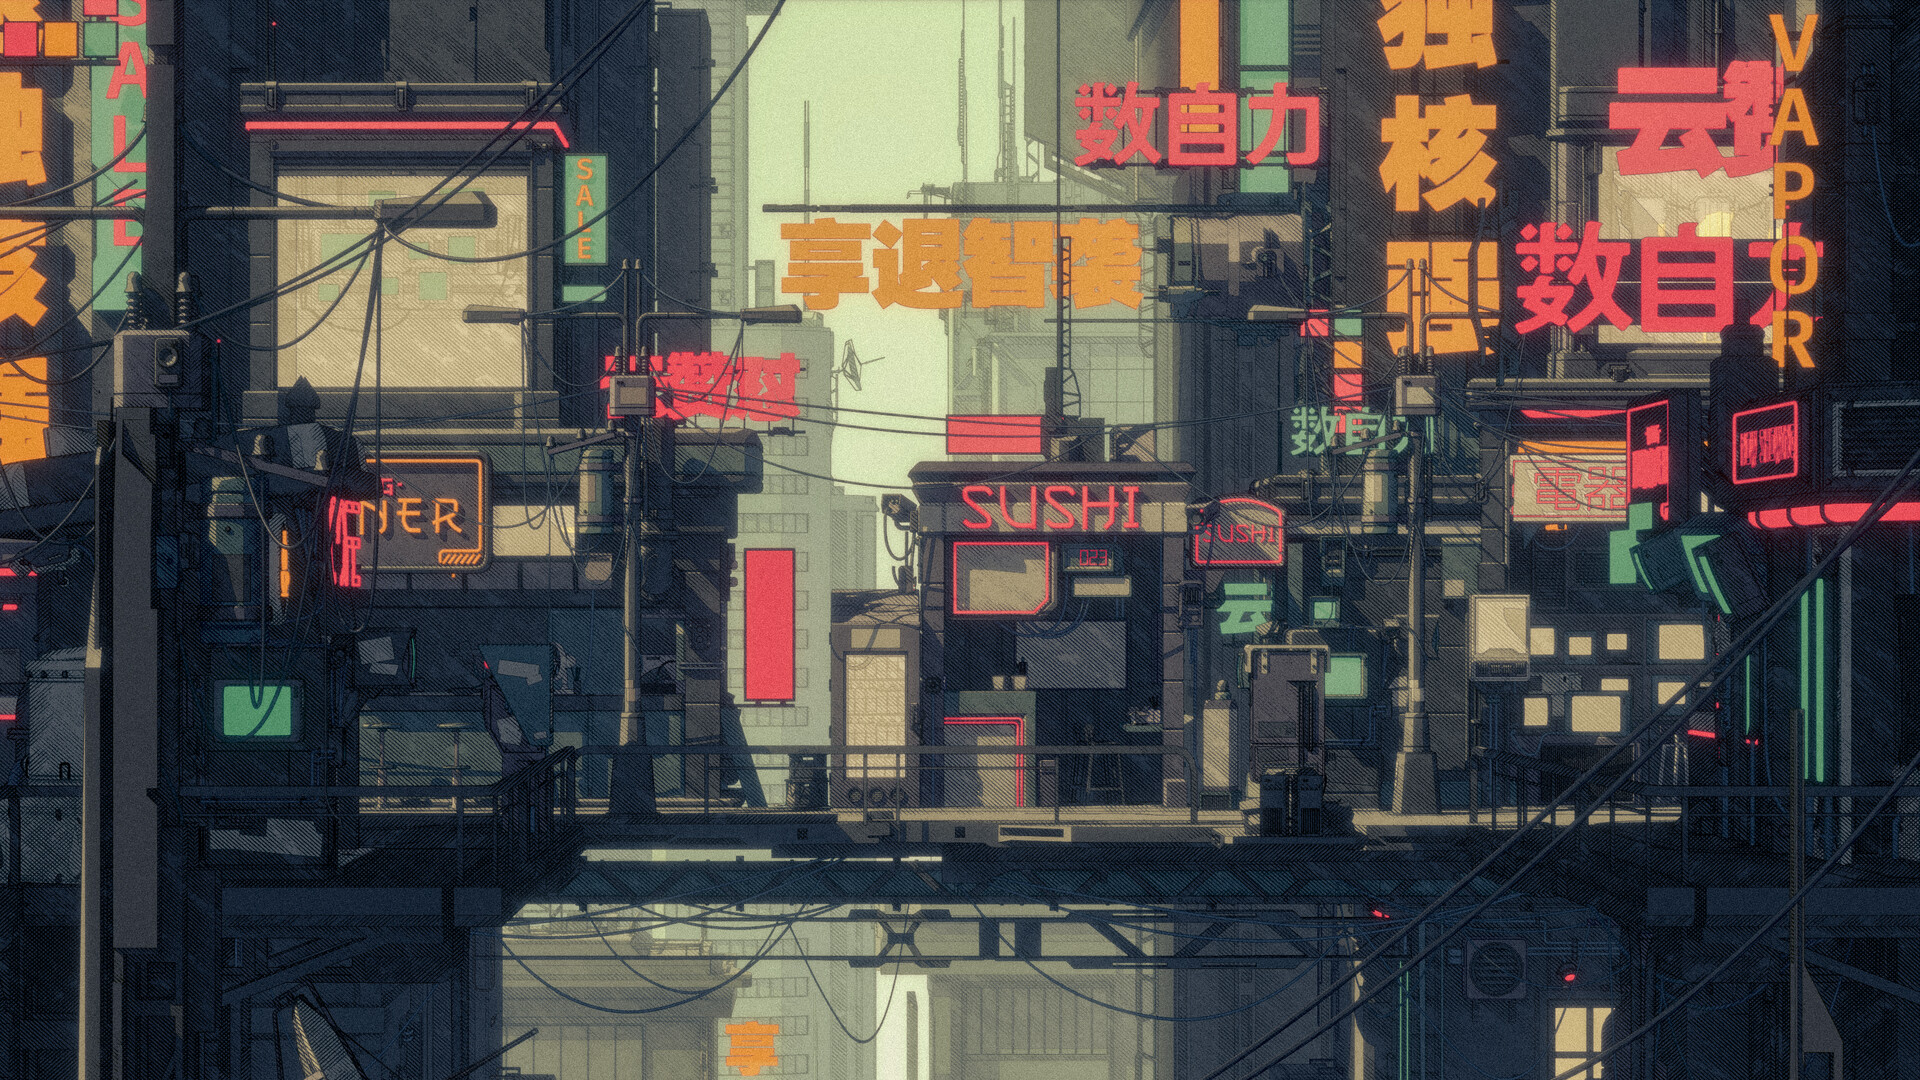 General 1920x1080 cyberpunk city lights illustration digital art urban building anime futuristic science fiction advertisements Japan